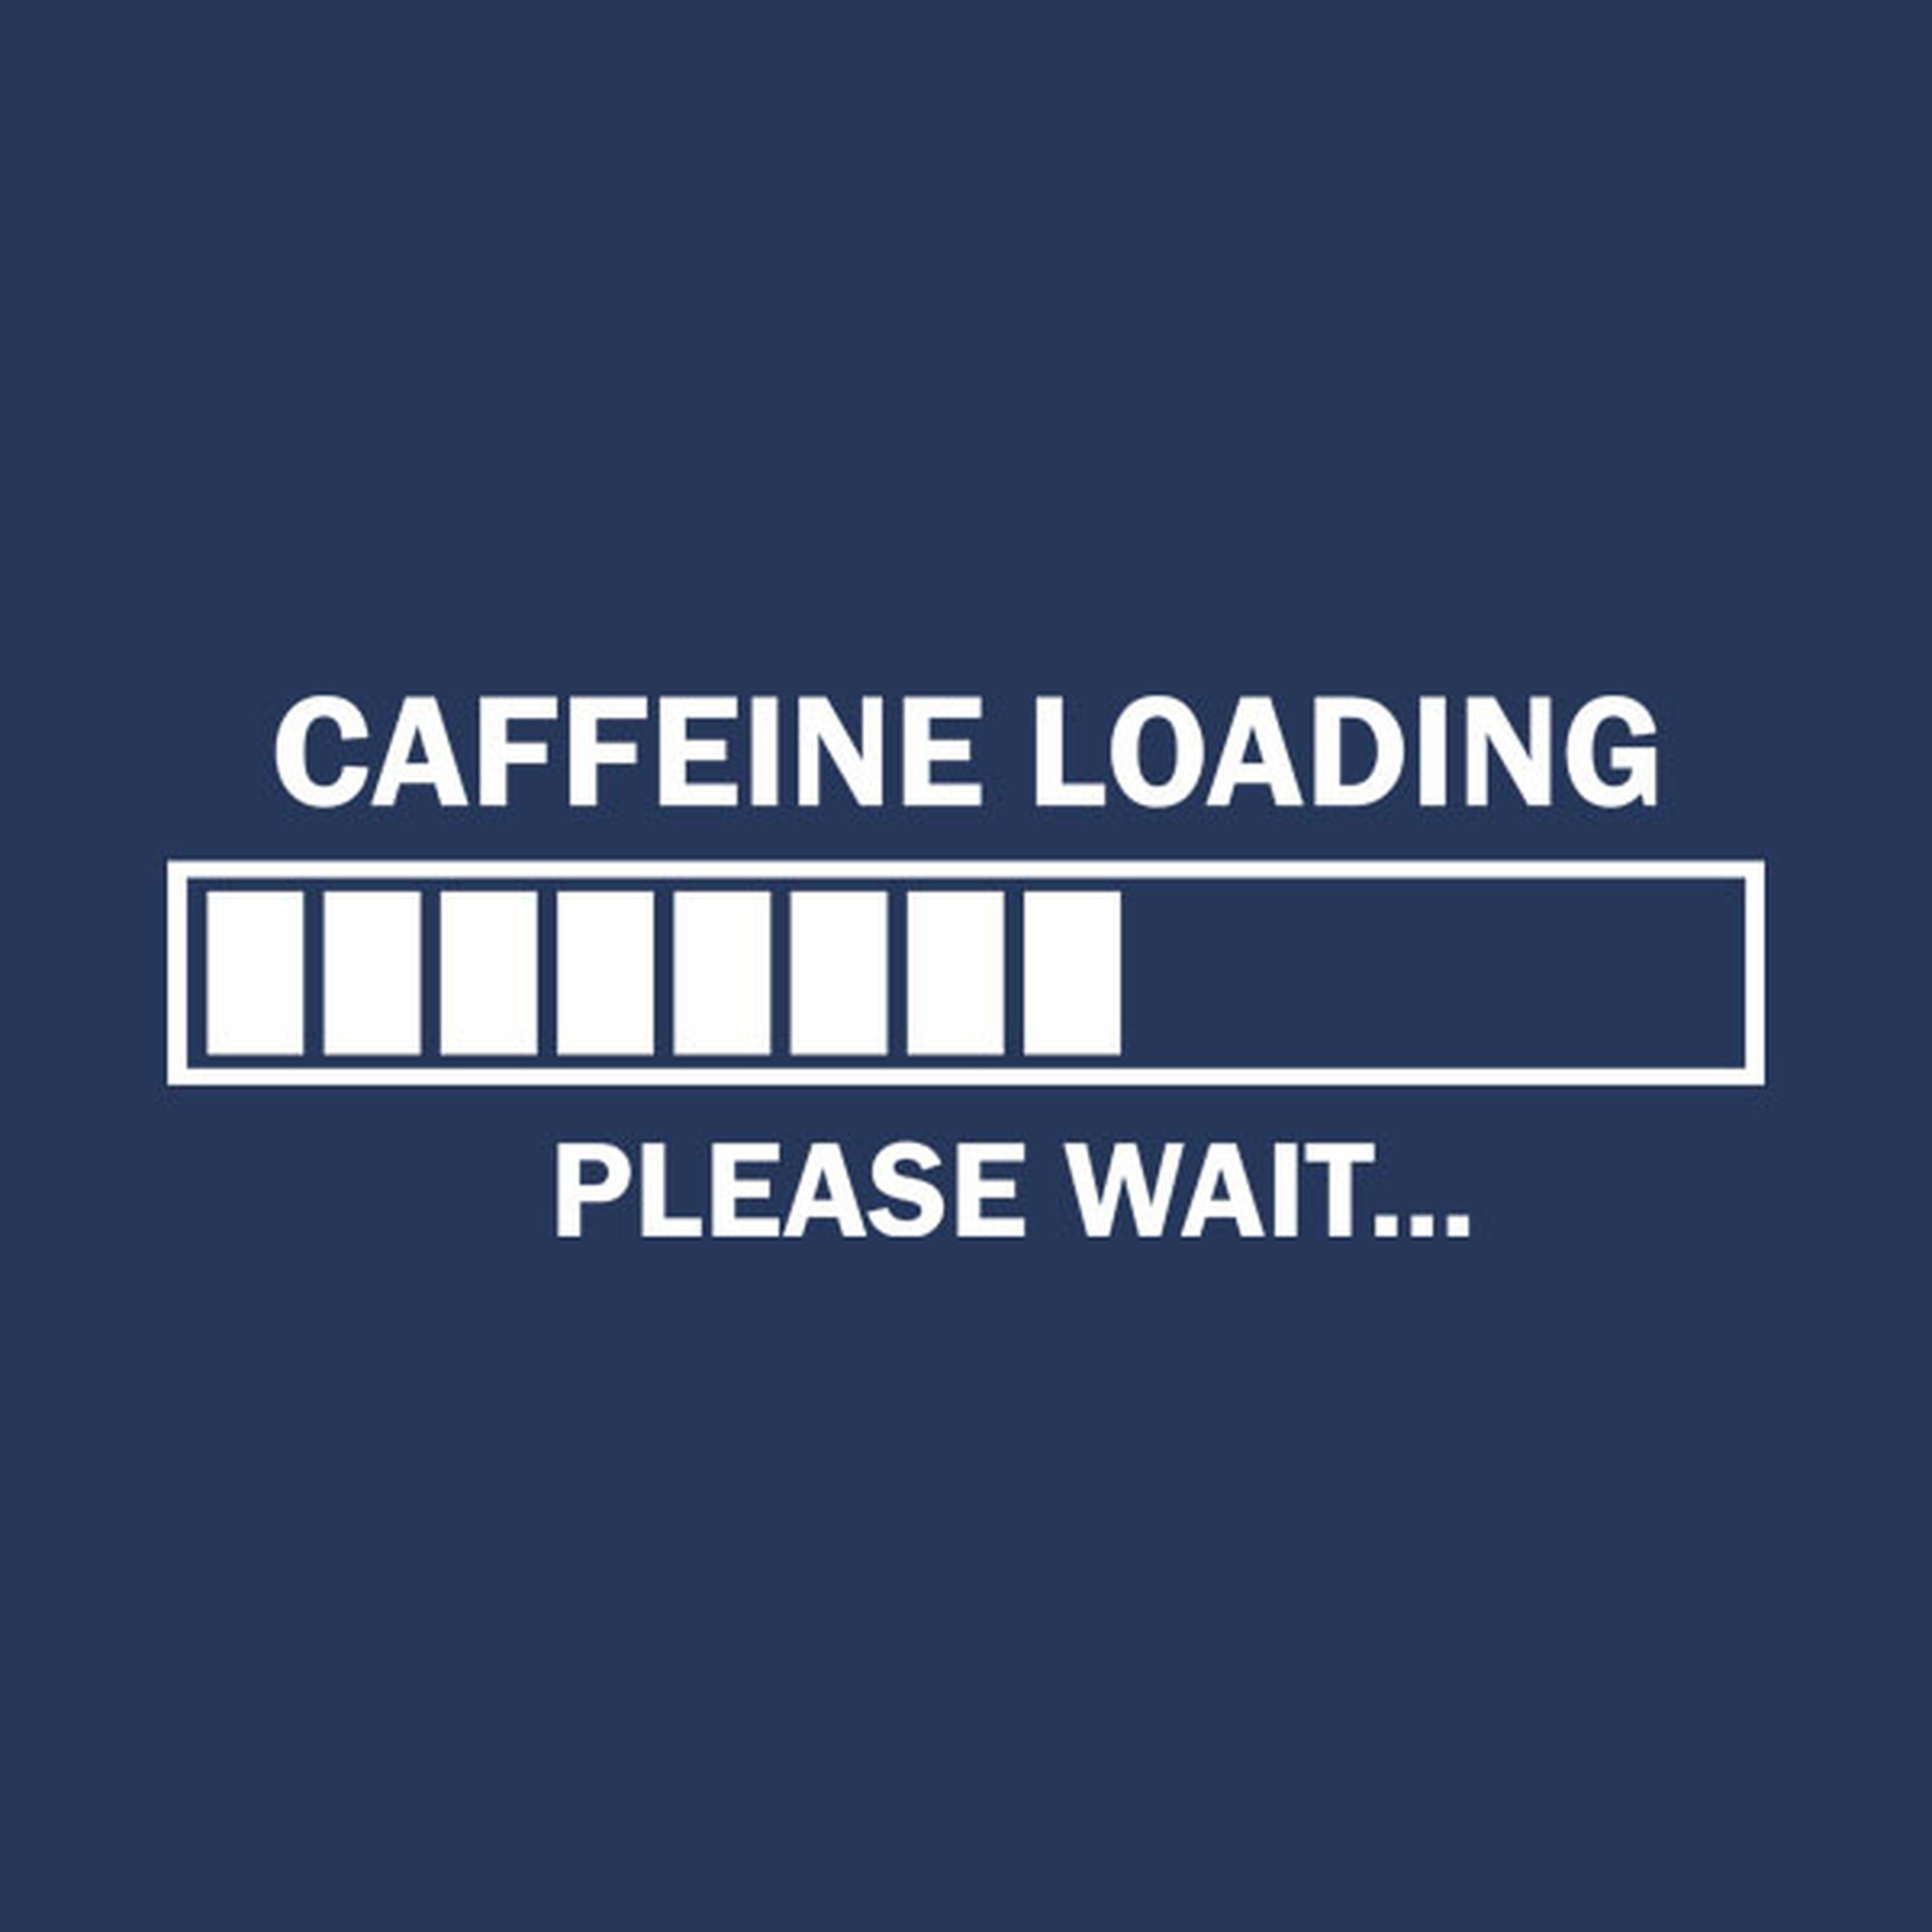 Caffeine loading. Please wait. - T-shirt